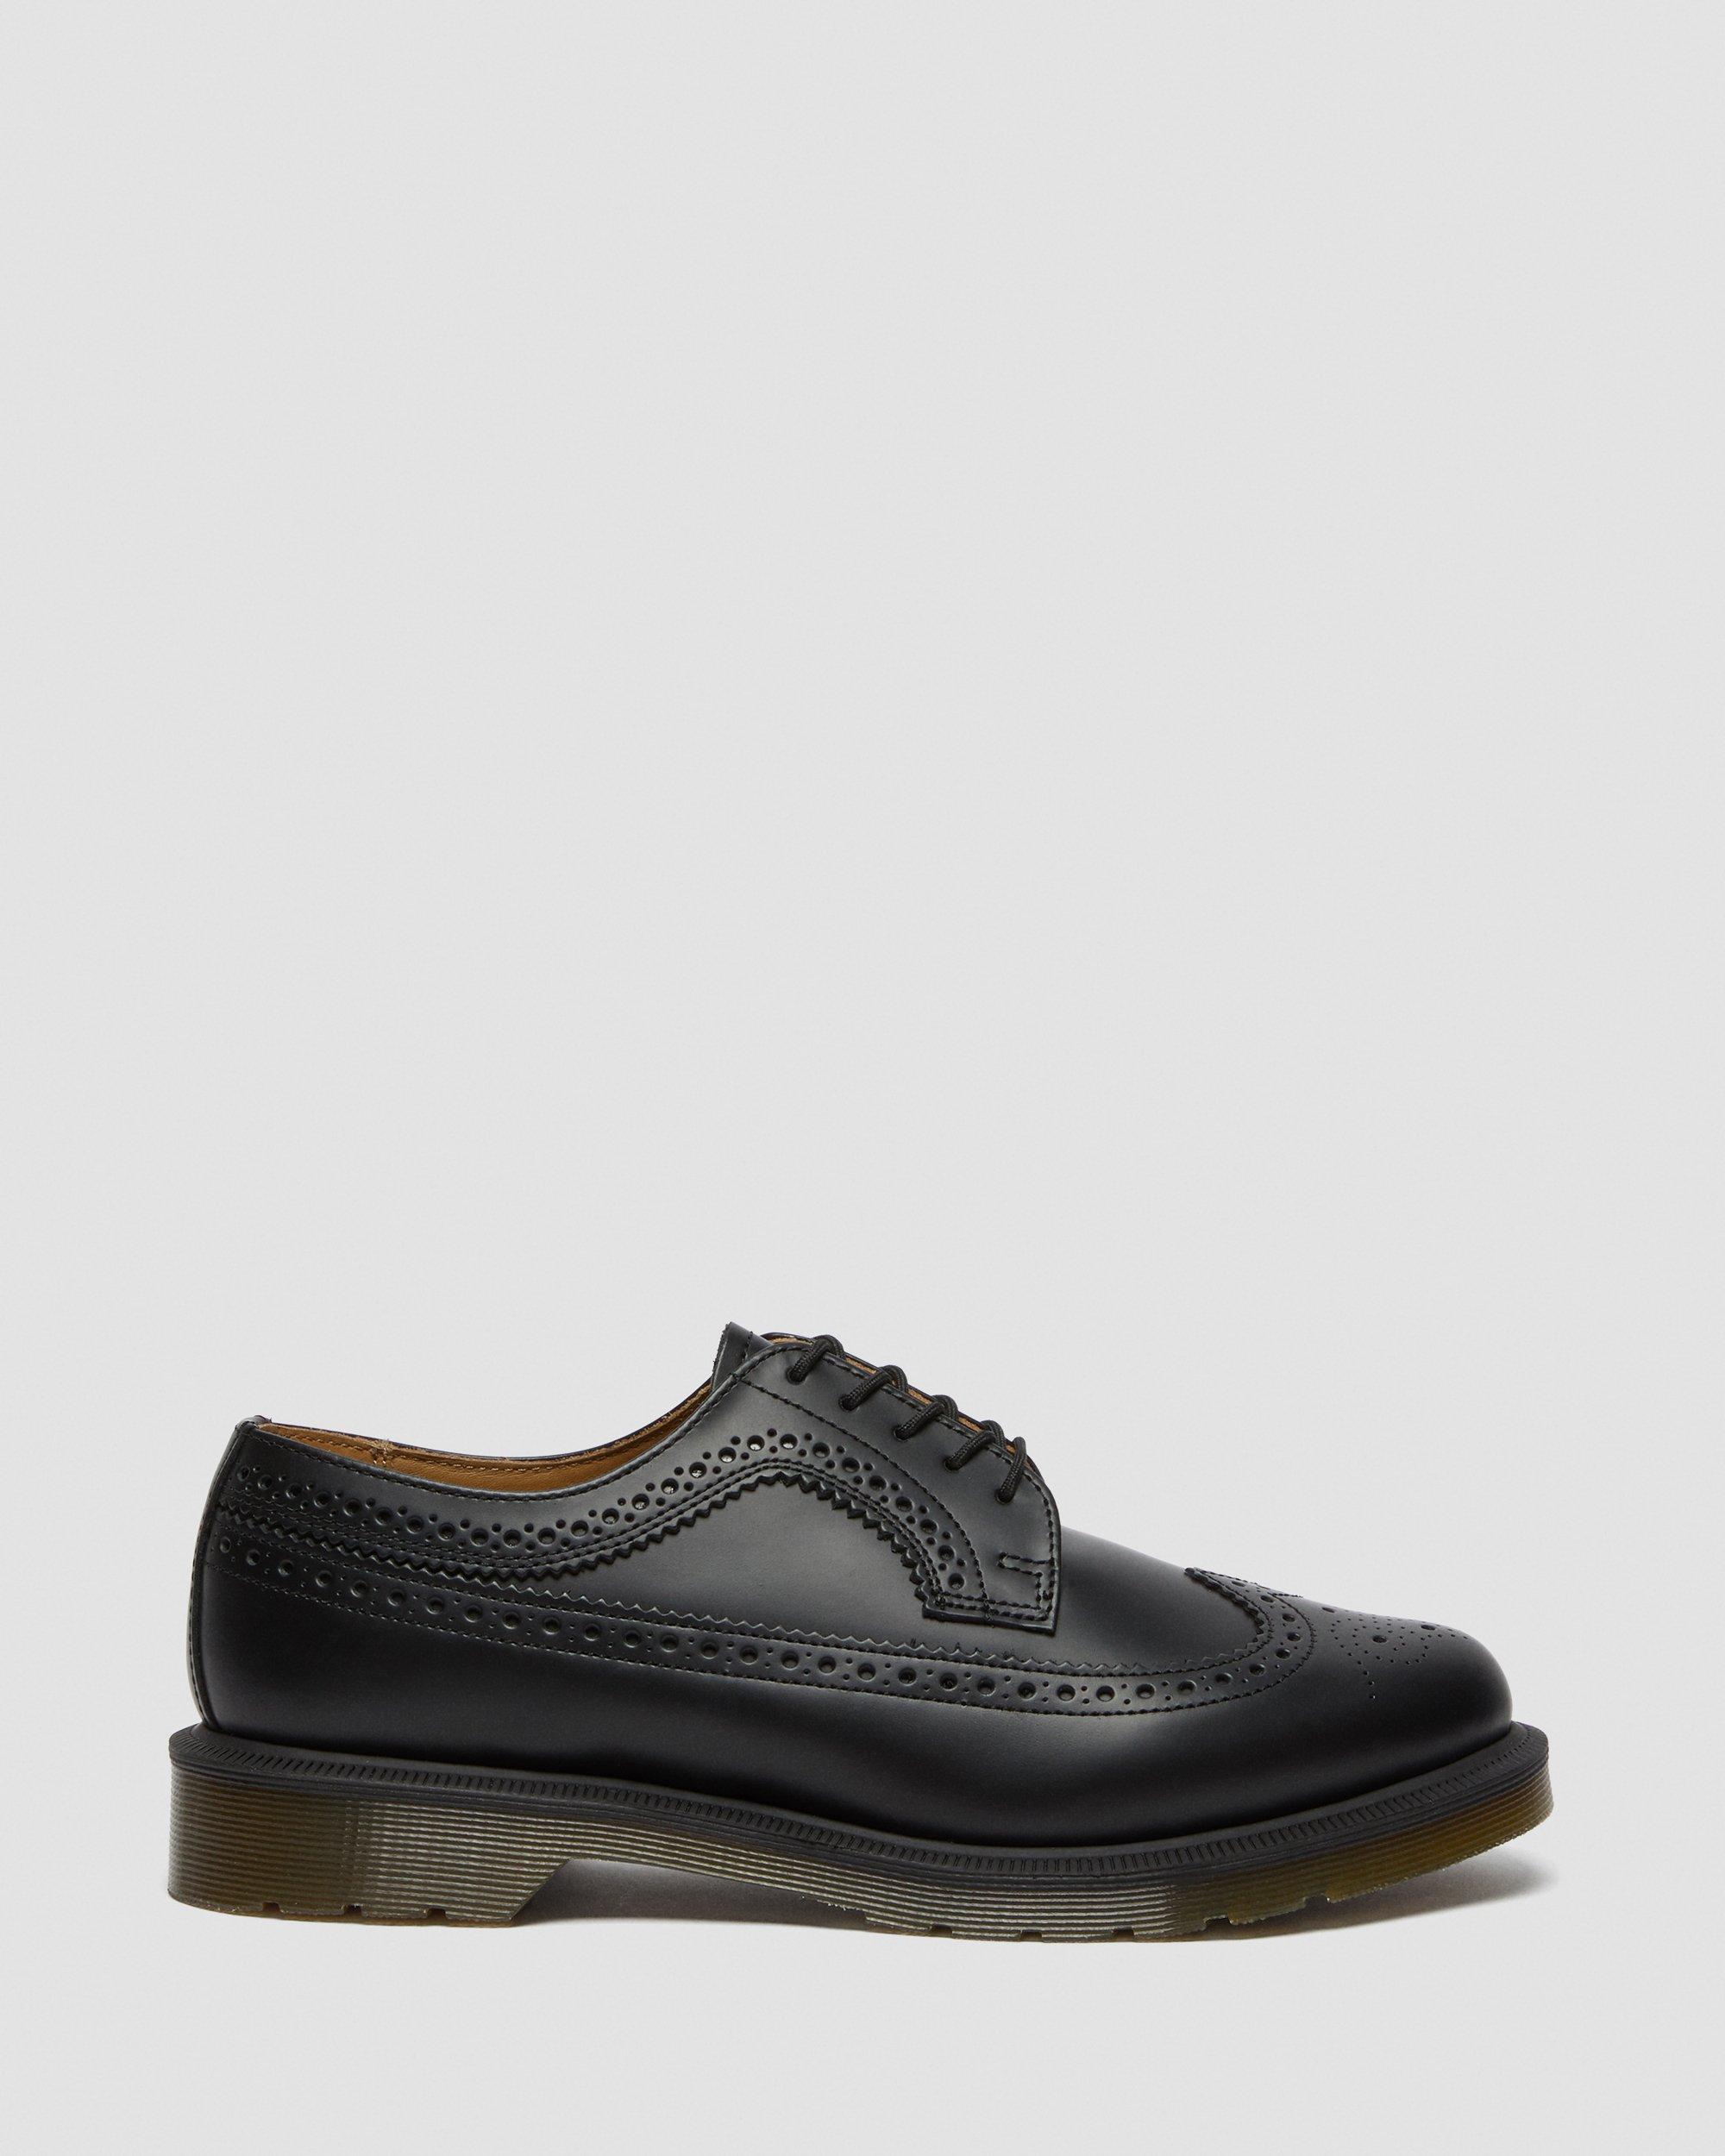 Martens 3989 MONO scarpa stringata stile inglese in pelle nera suola nera Dr